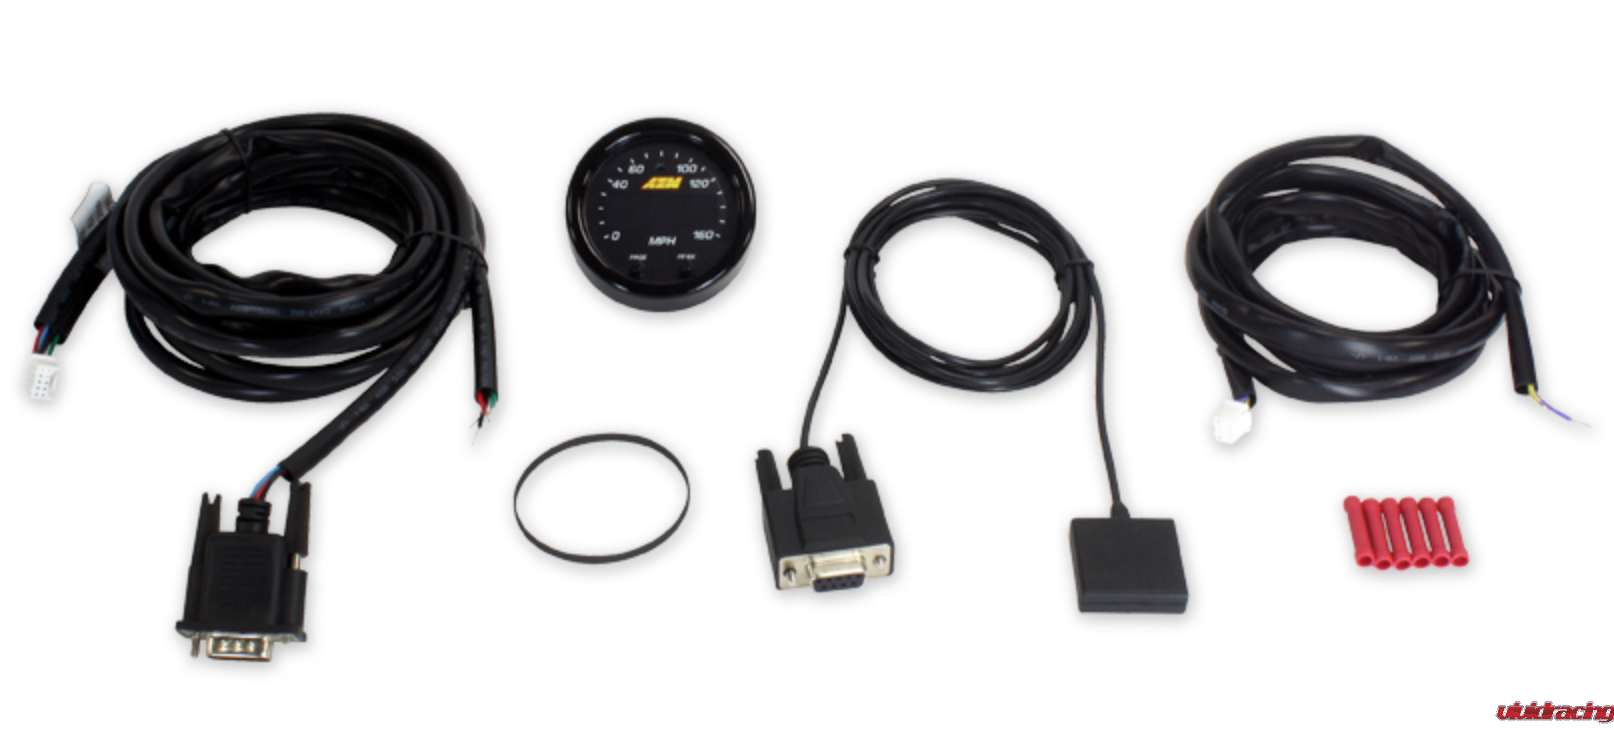 AEM X-Series, GPS, data logger, gauge, LED display, speedometer